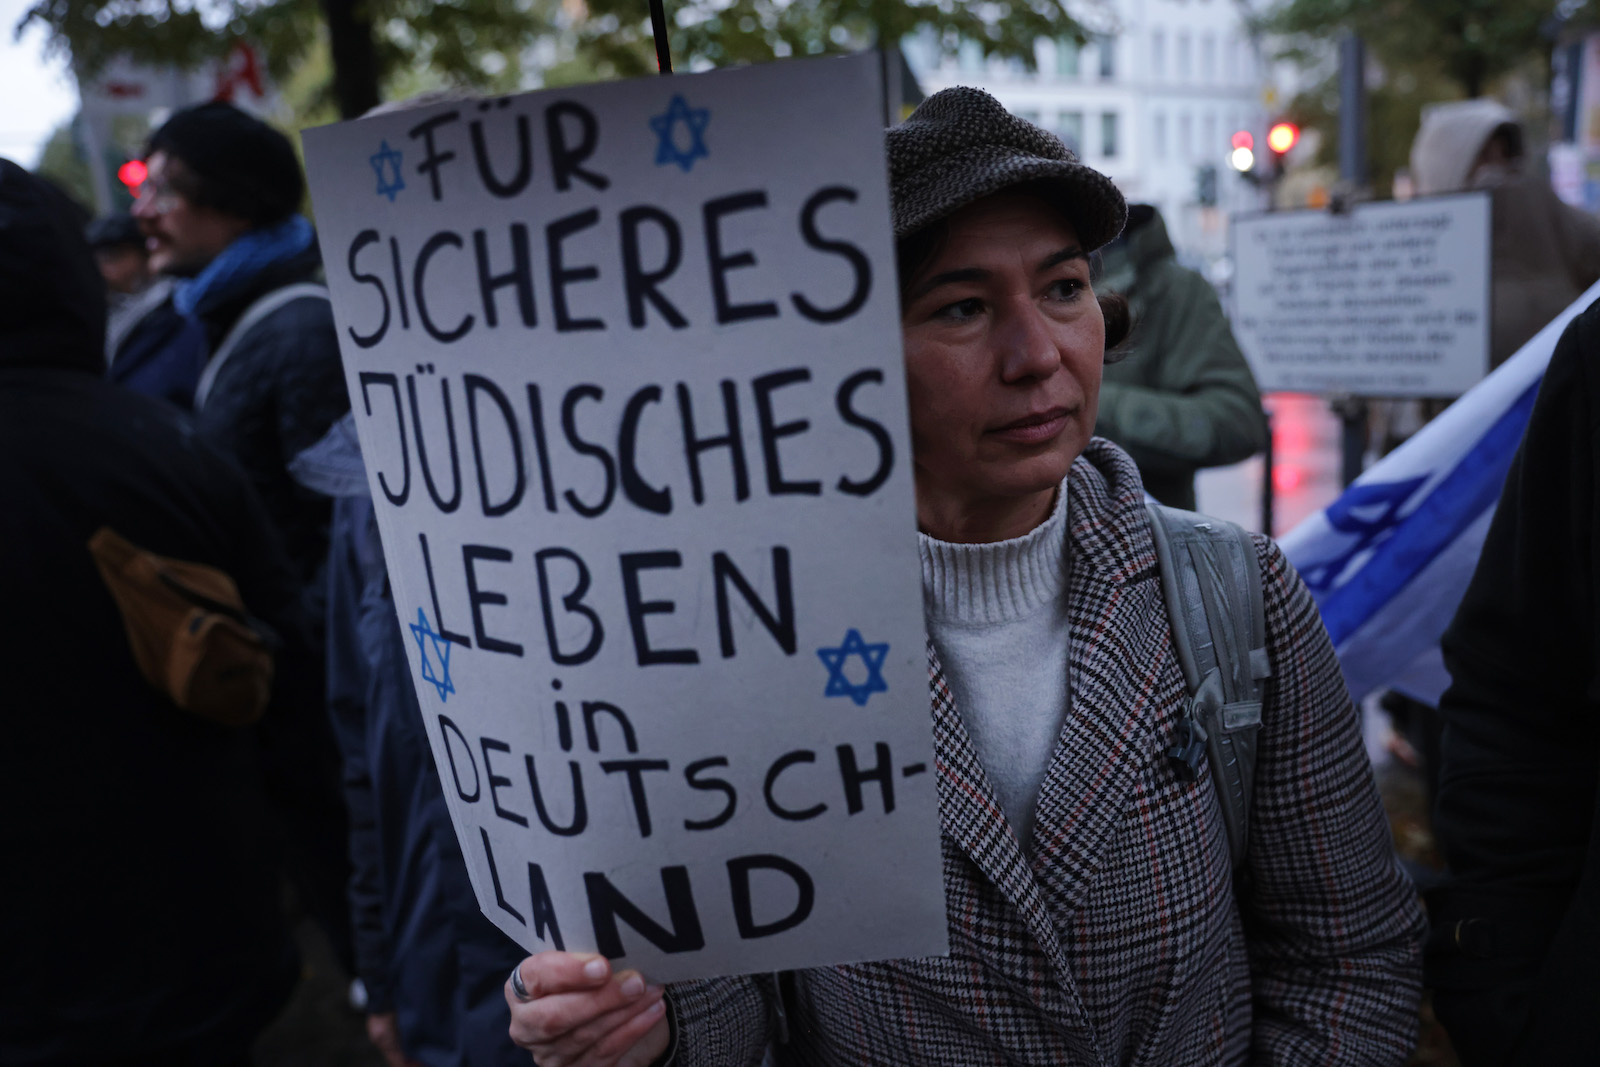 For safe Jewish life in Germany anti semitism islamophobia